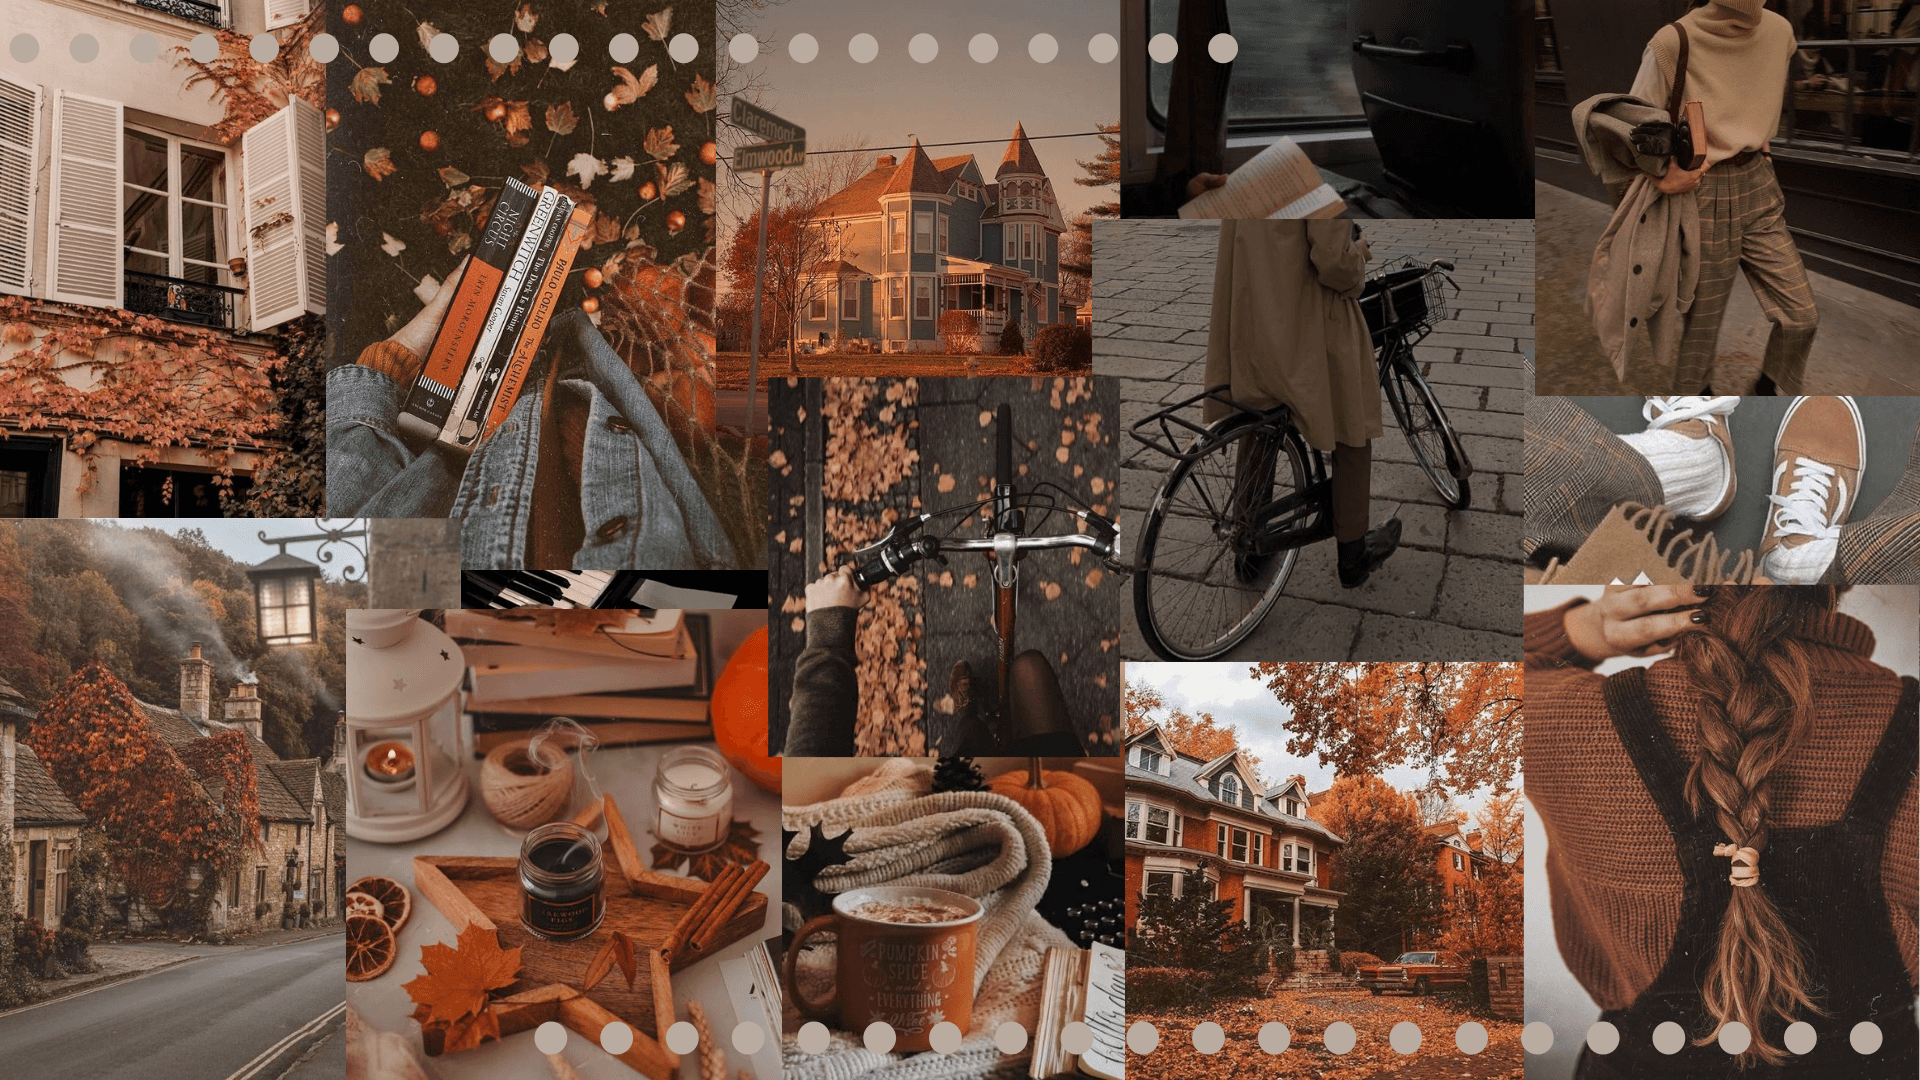 Autumn Collage - A Collage Of Photos Of Autumn